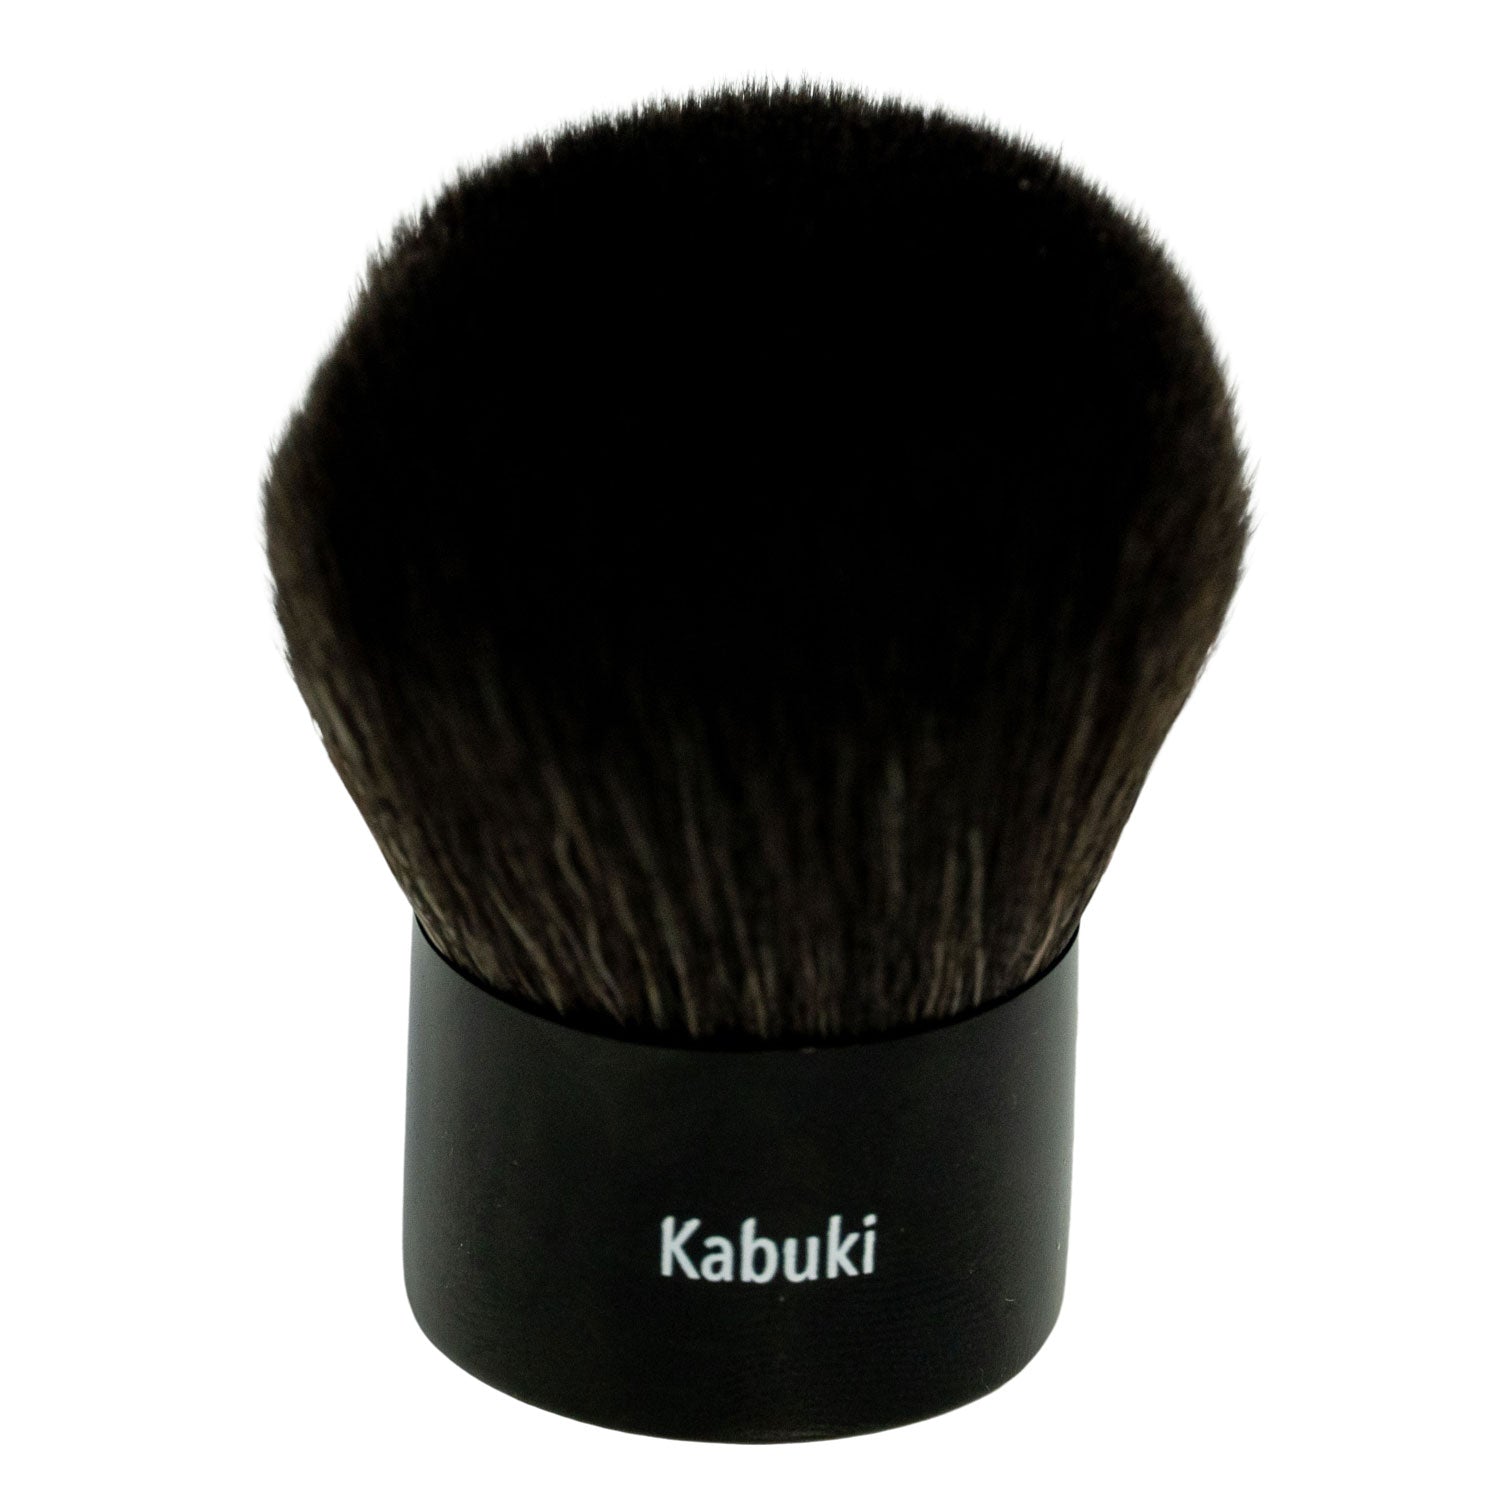 Mommy Makeup Kabuki Brush with premium synthetic (vegan) bristles - hypoallergenic